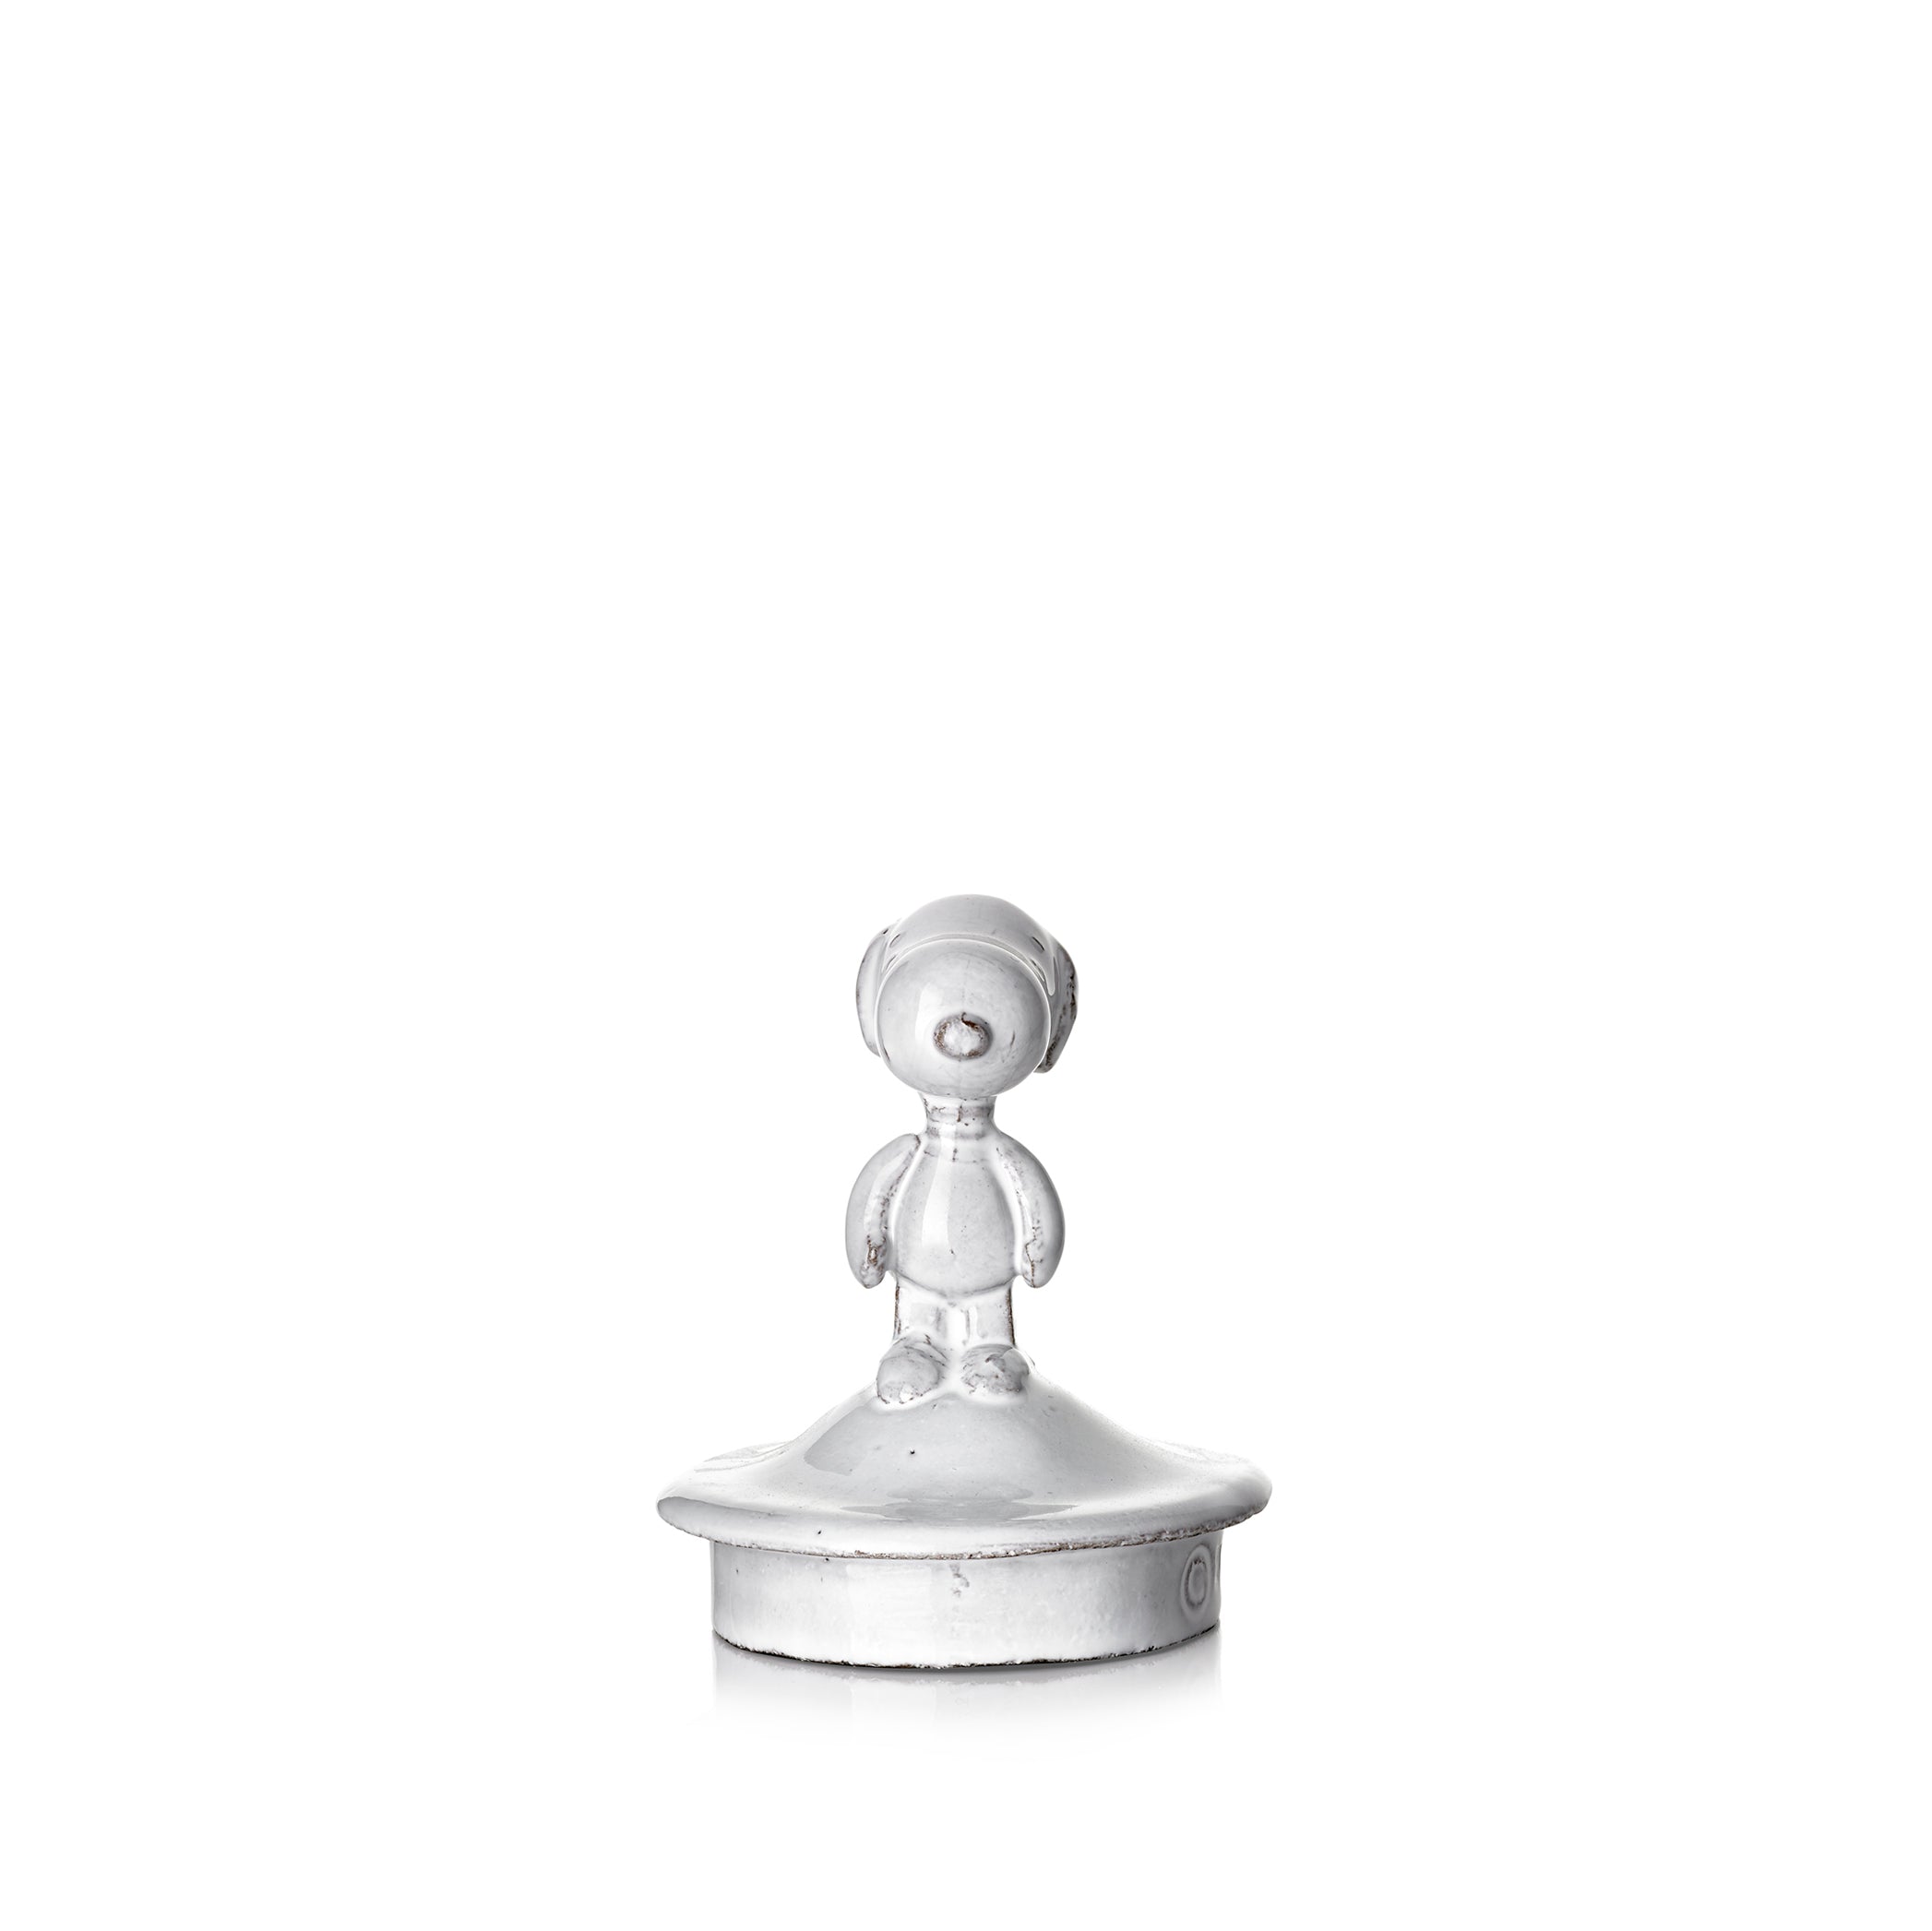 Snoopy Candle Lid by Astier de Villatte, 9cm